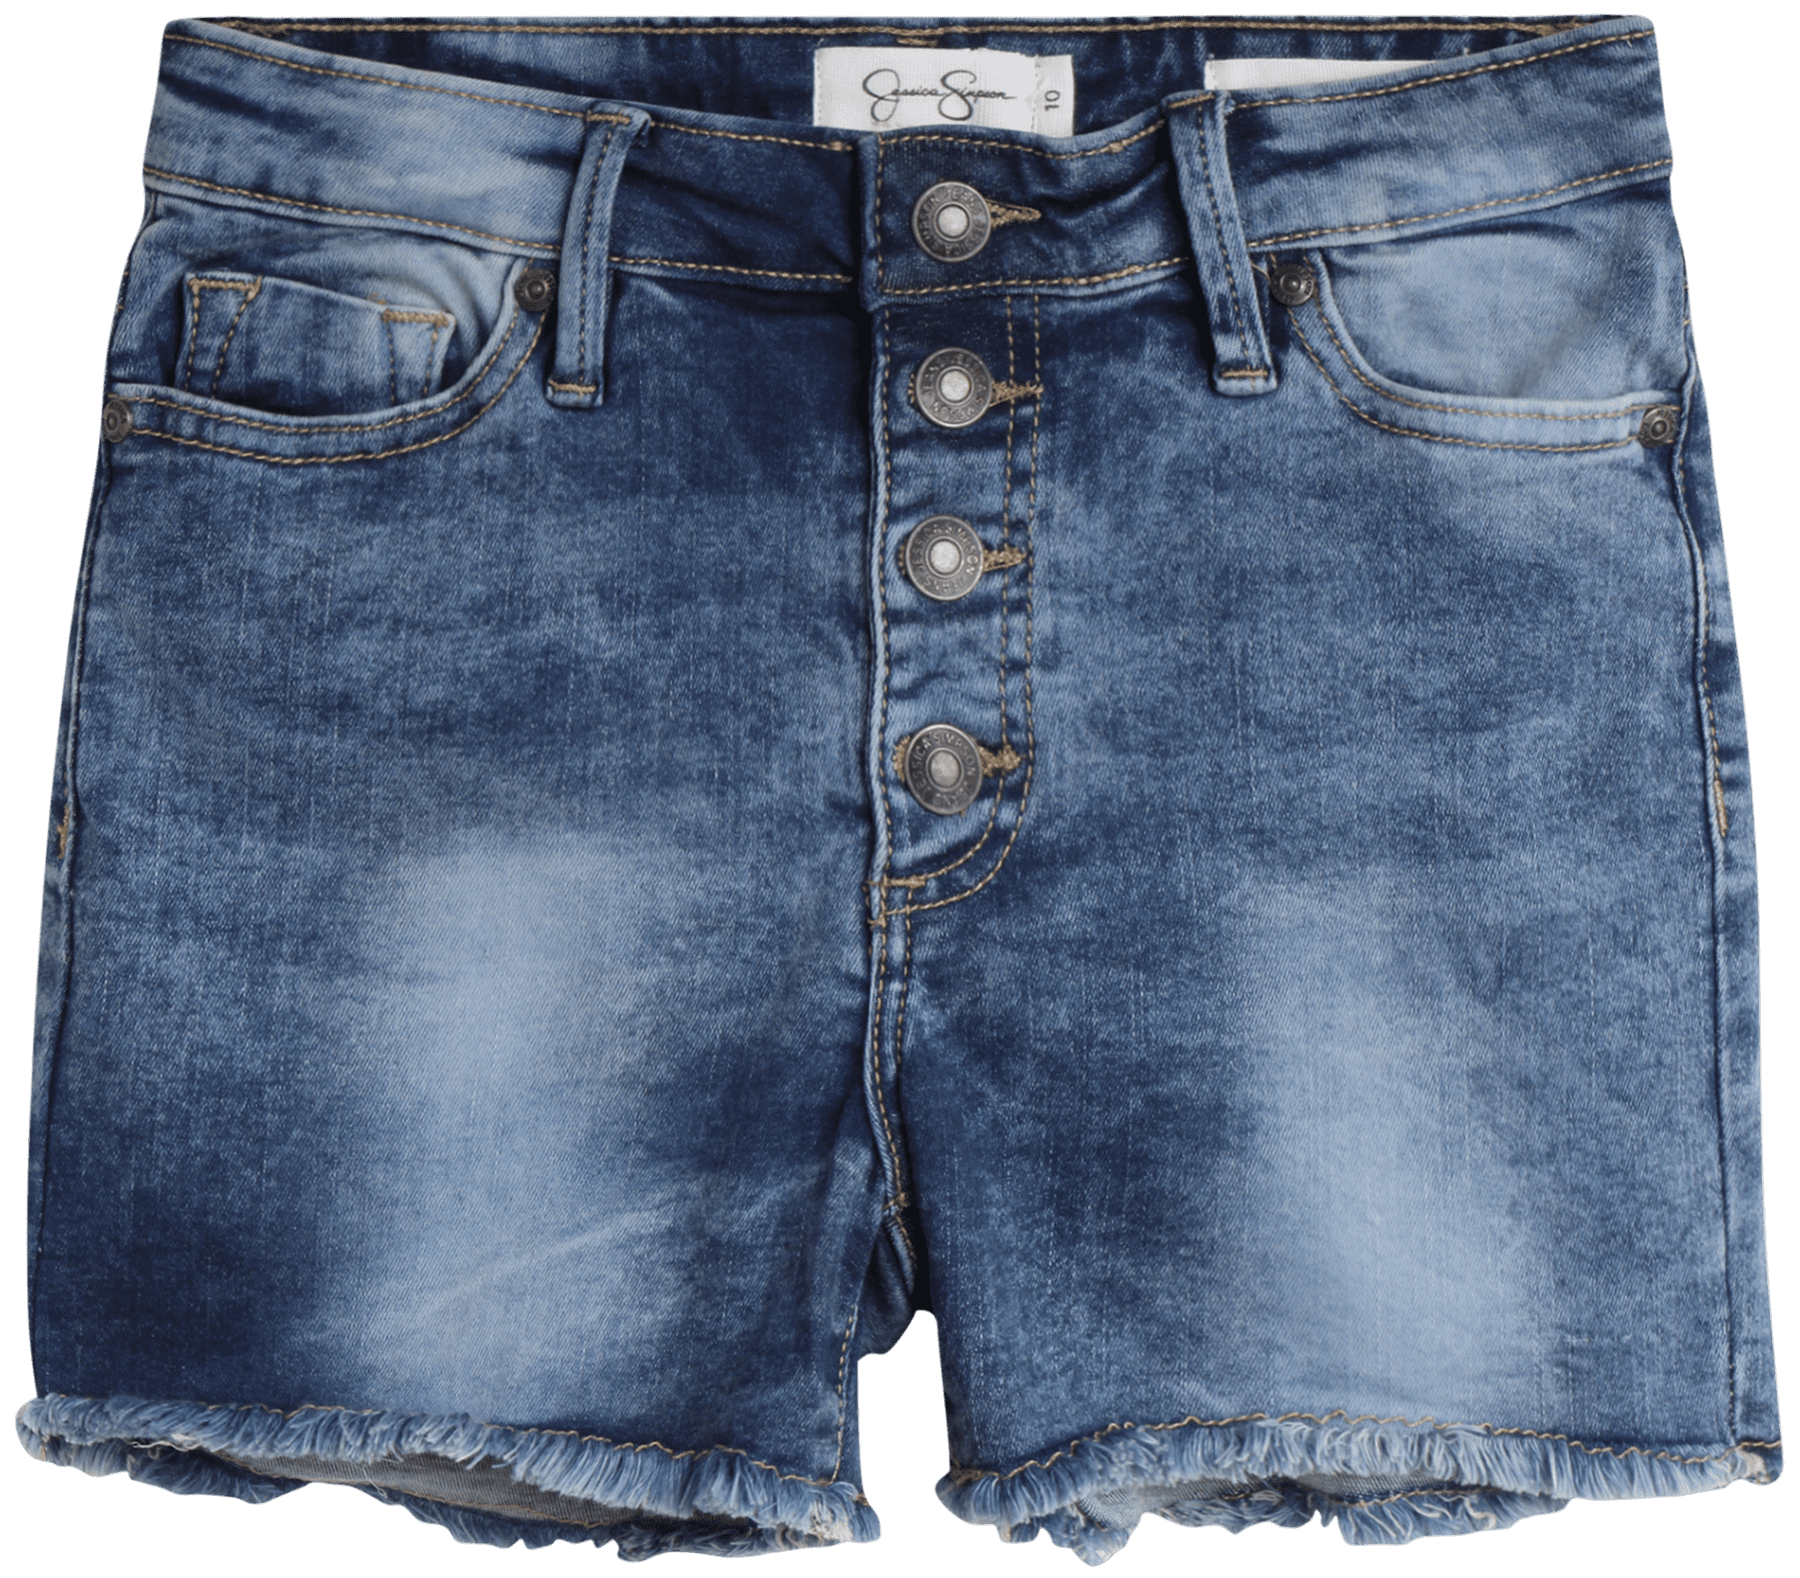 Jessica Simpson Girls' Shorts - 5 Pocket Stretch Denim Jean Shorts ...